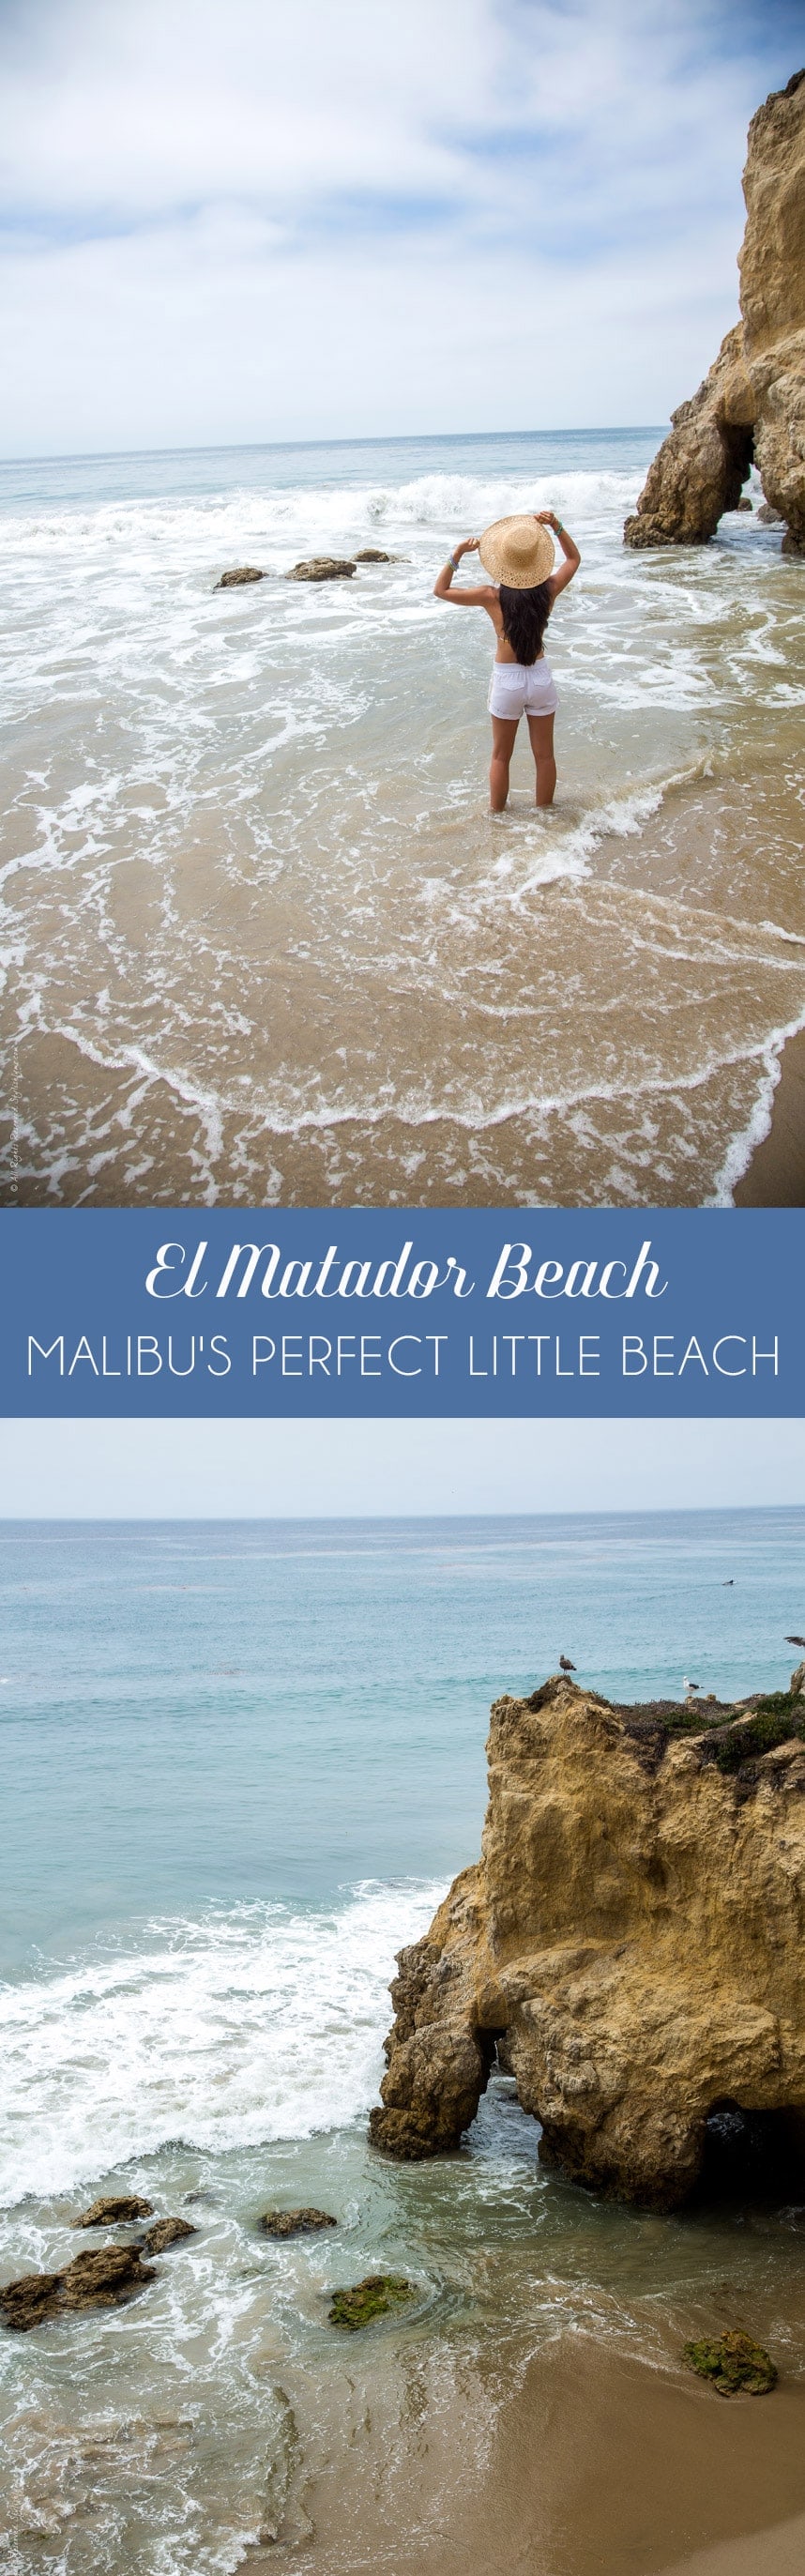 El Matador Beach - Malibu's Perfect Little Beach - Visit Stylishlyme.com and see why you need to visit El Matador Beach